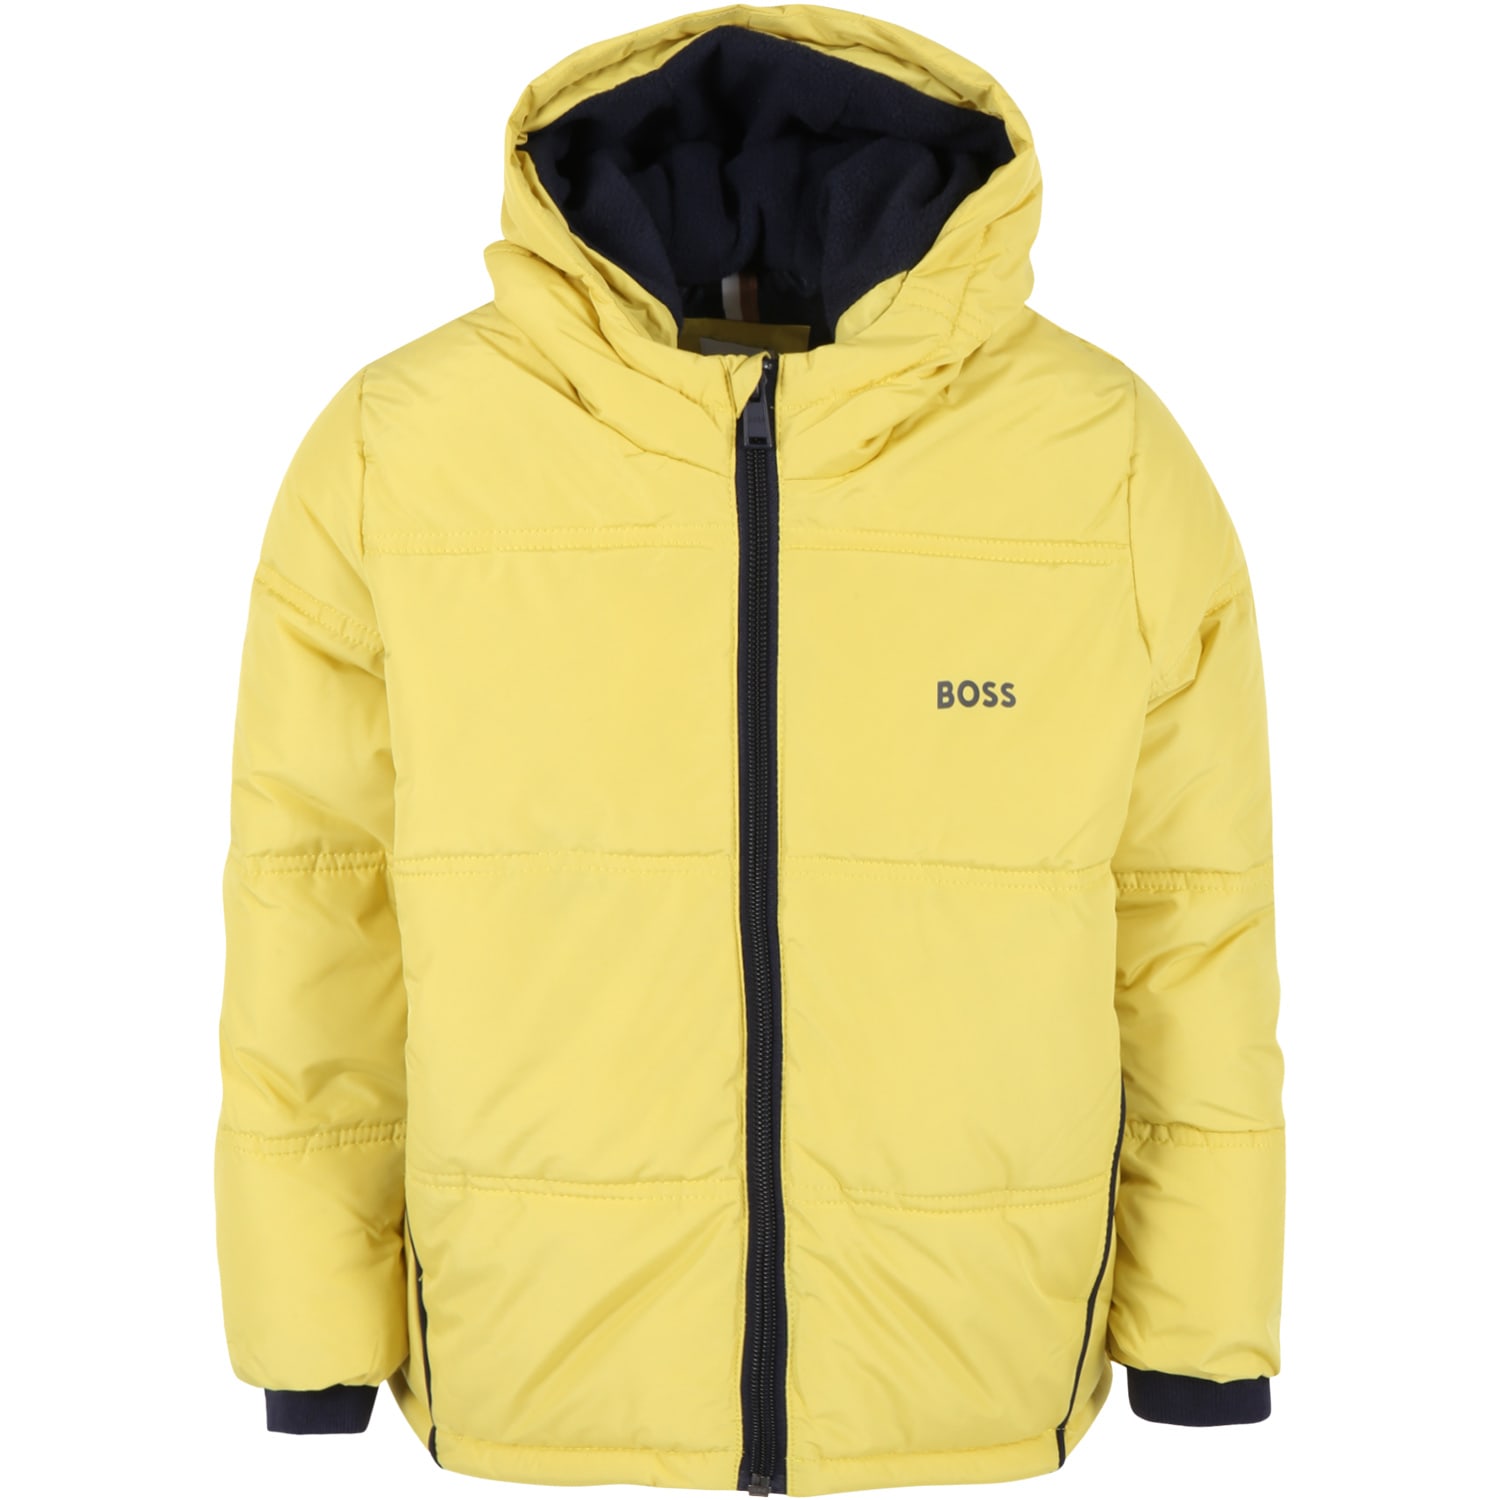 Hugo Boss Yellow Jacket For Boy With Logo